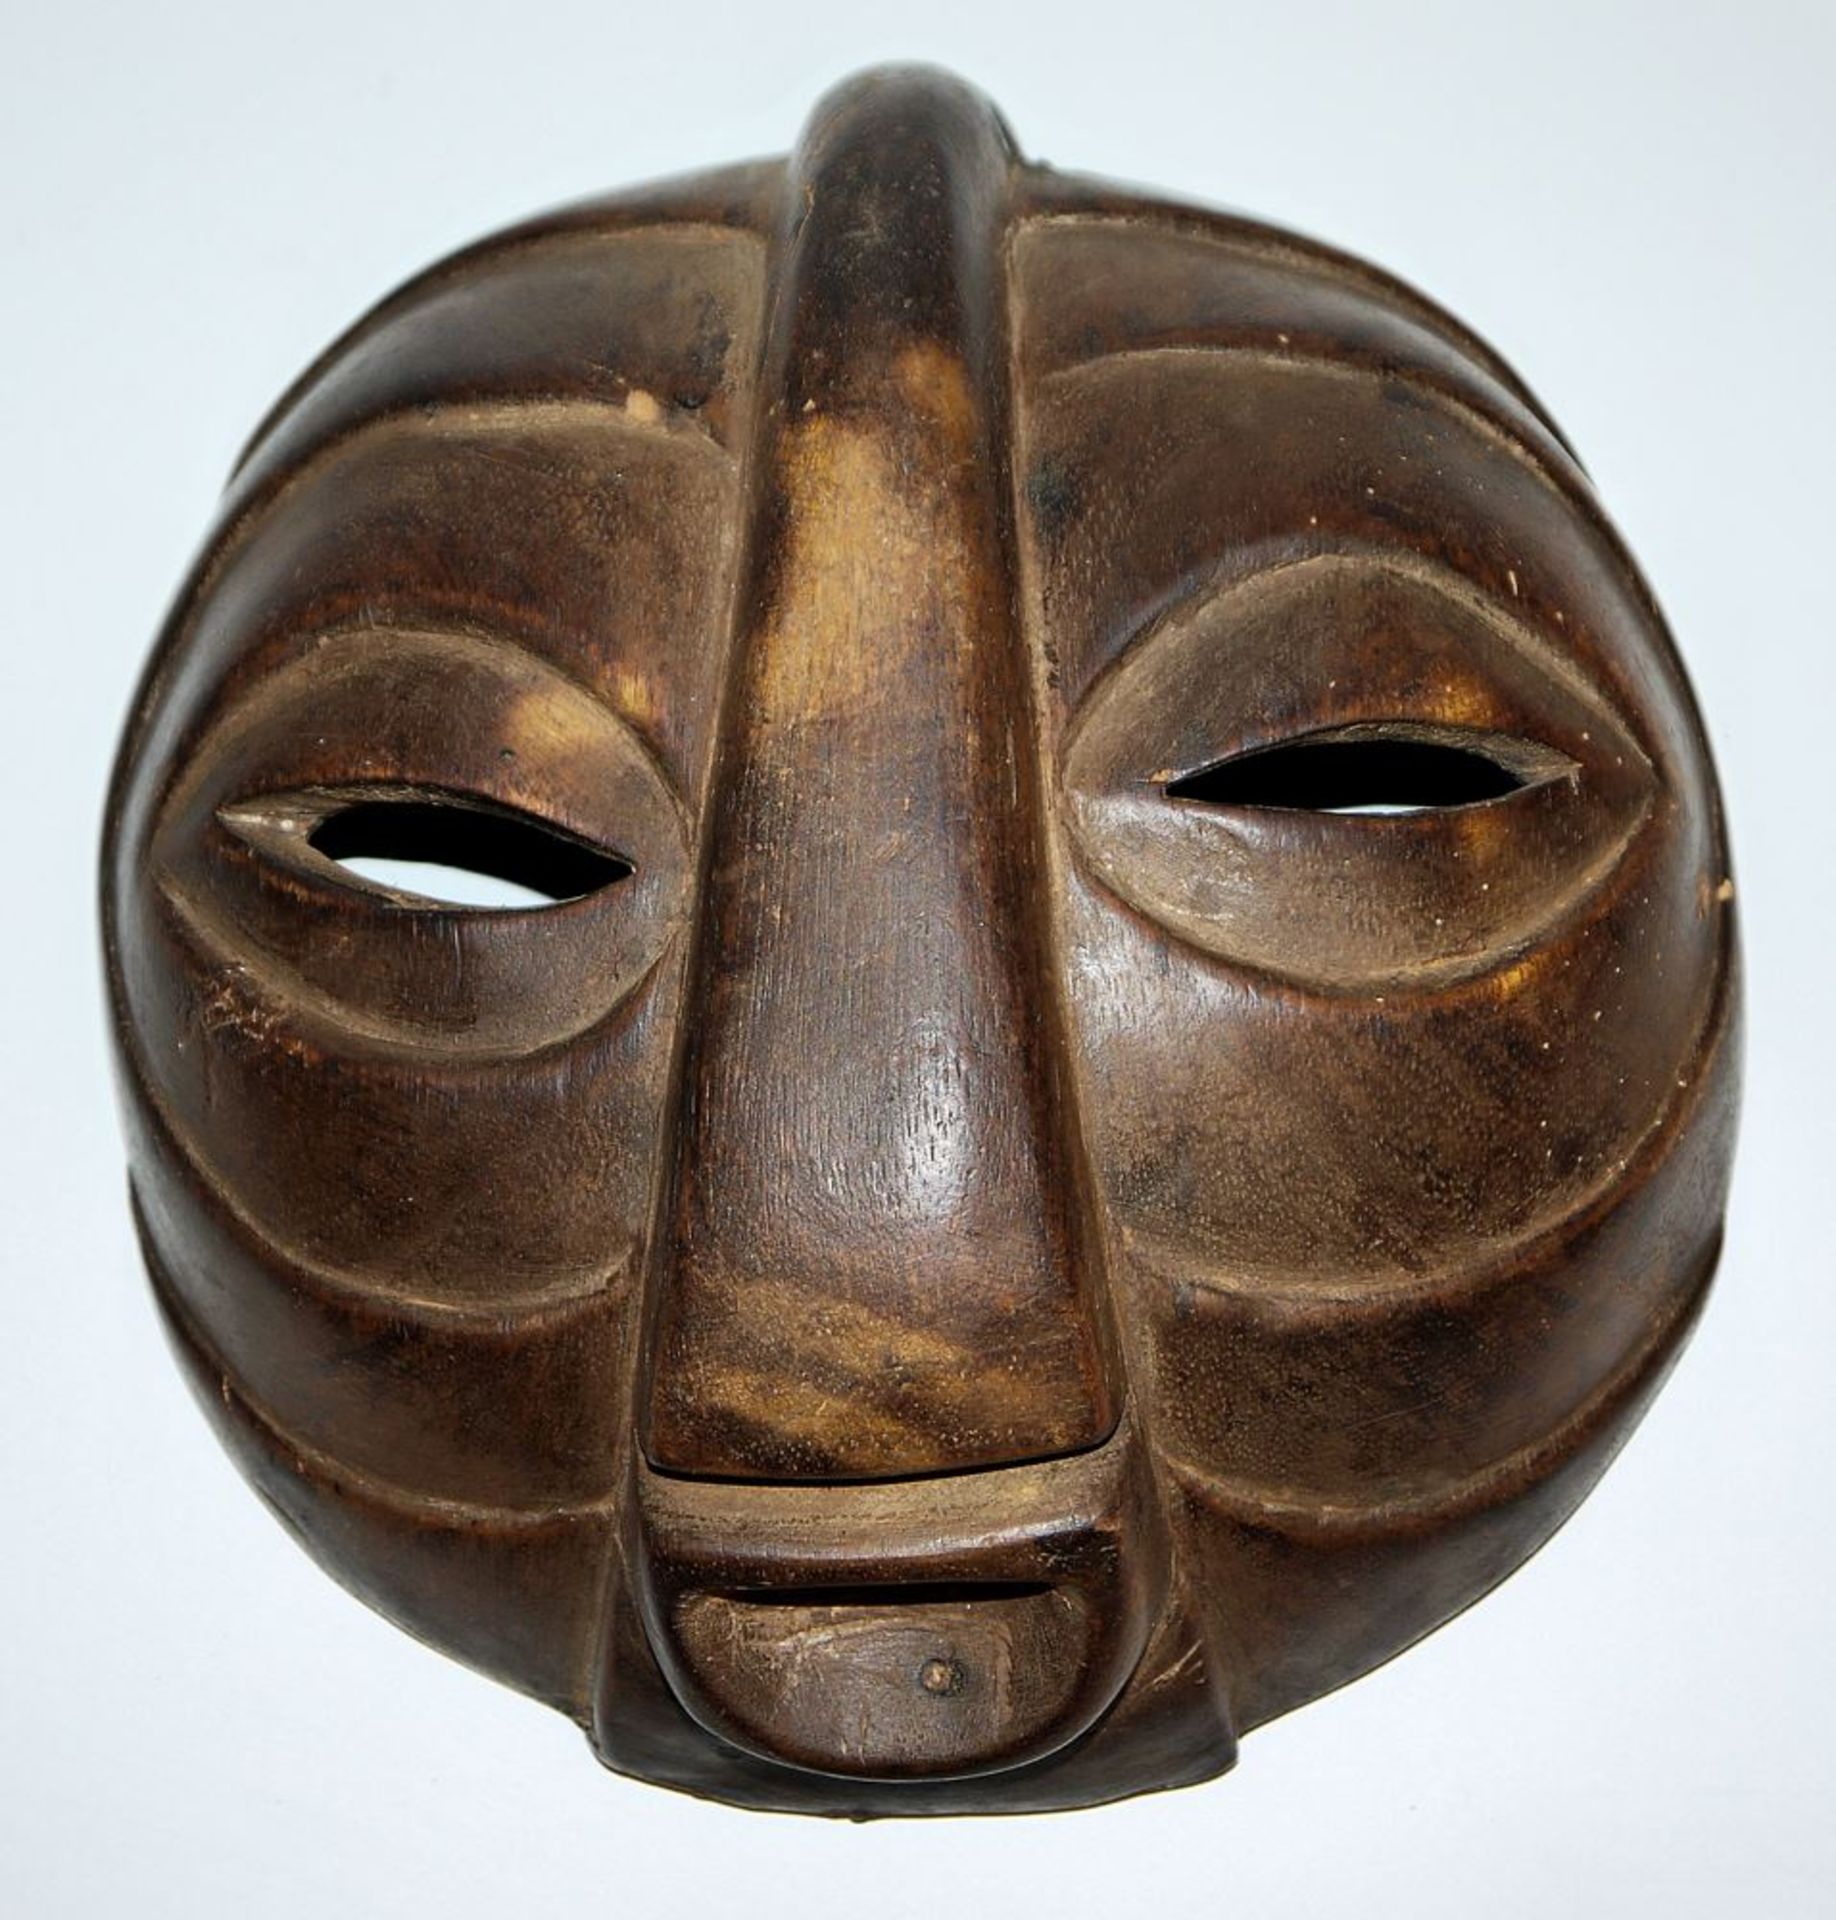 Kifweaving mask of the Luba, Congo